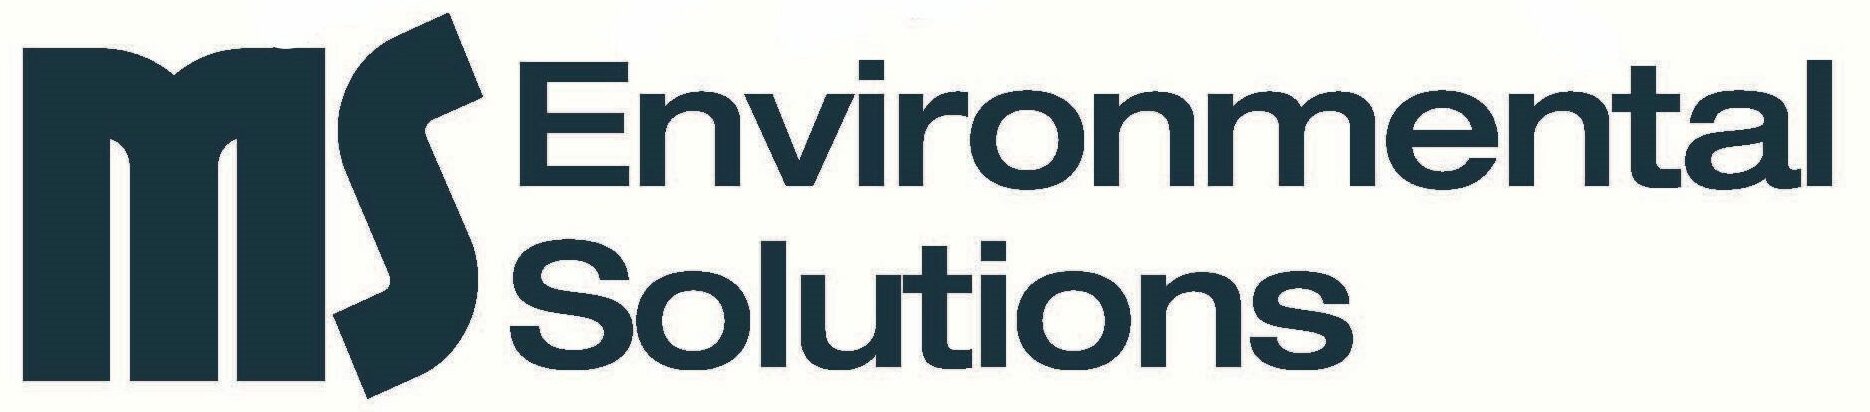 MS Environmental Solutions | Par 4 Sponsor